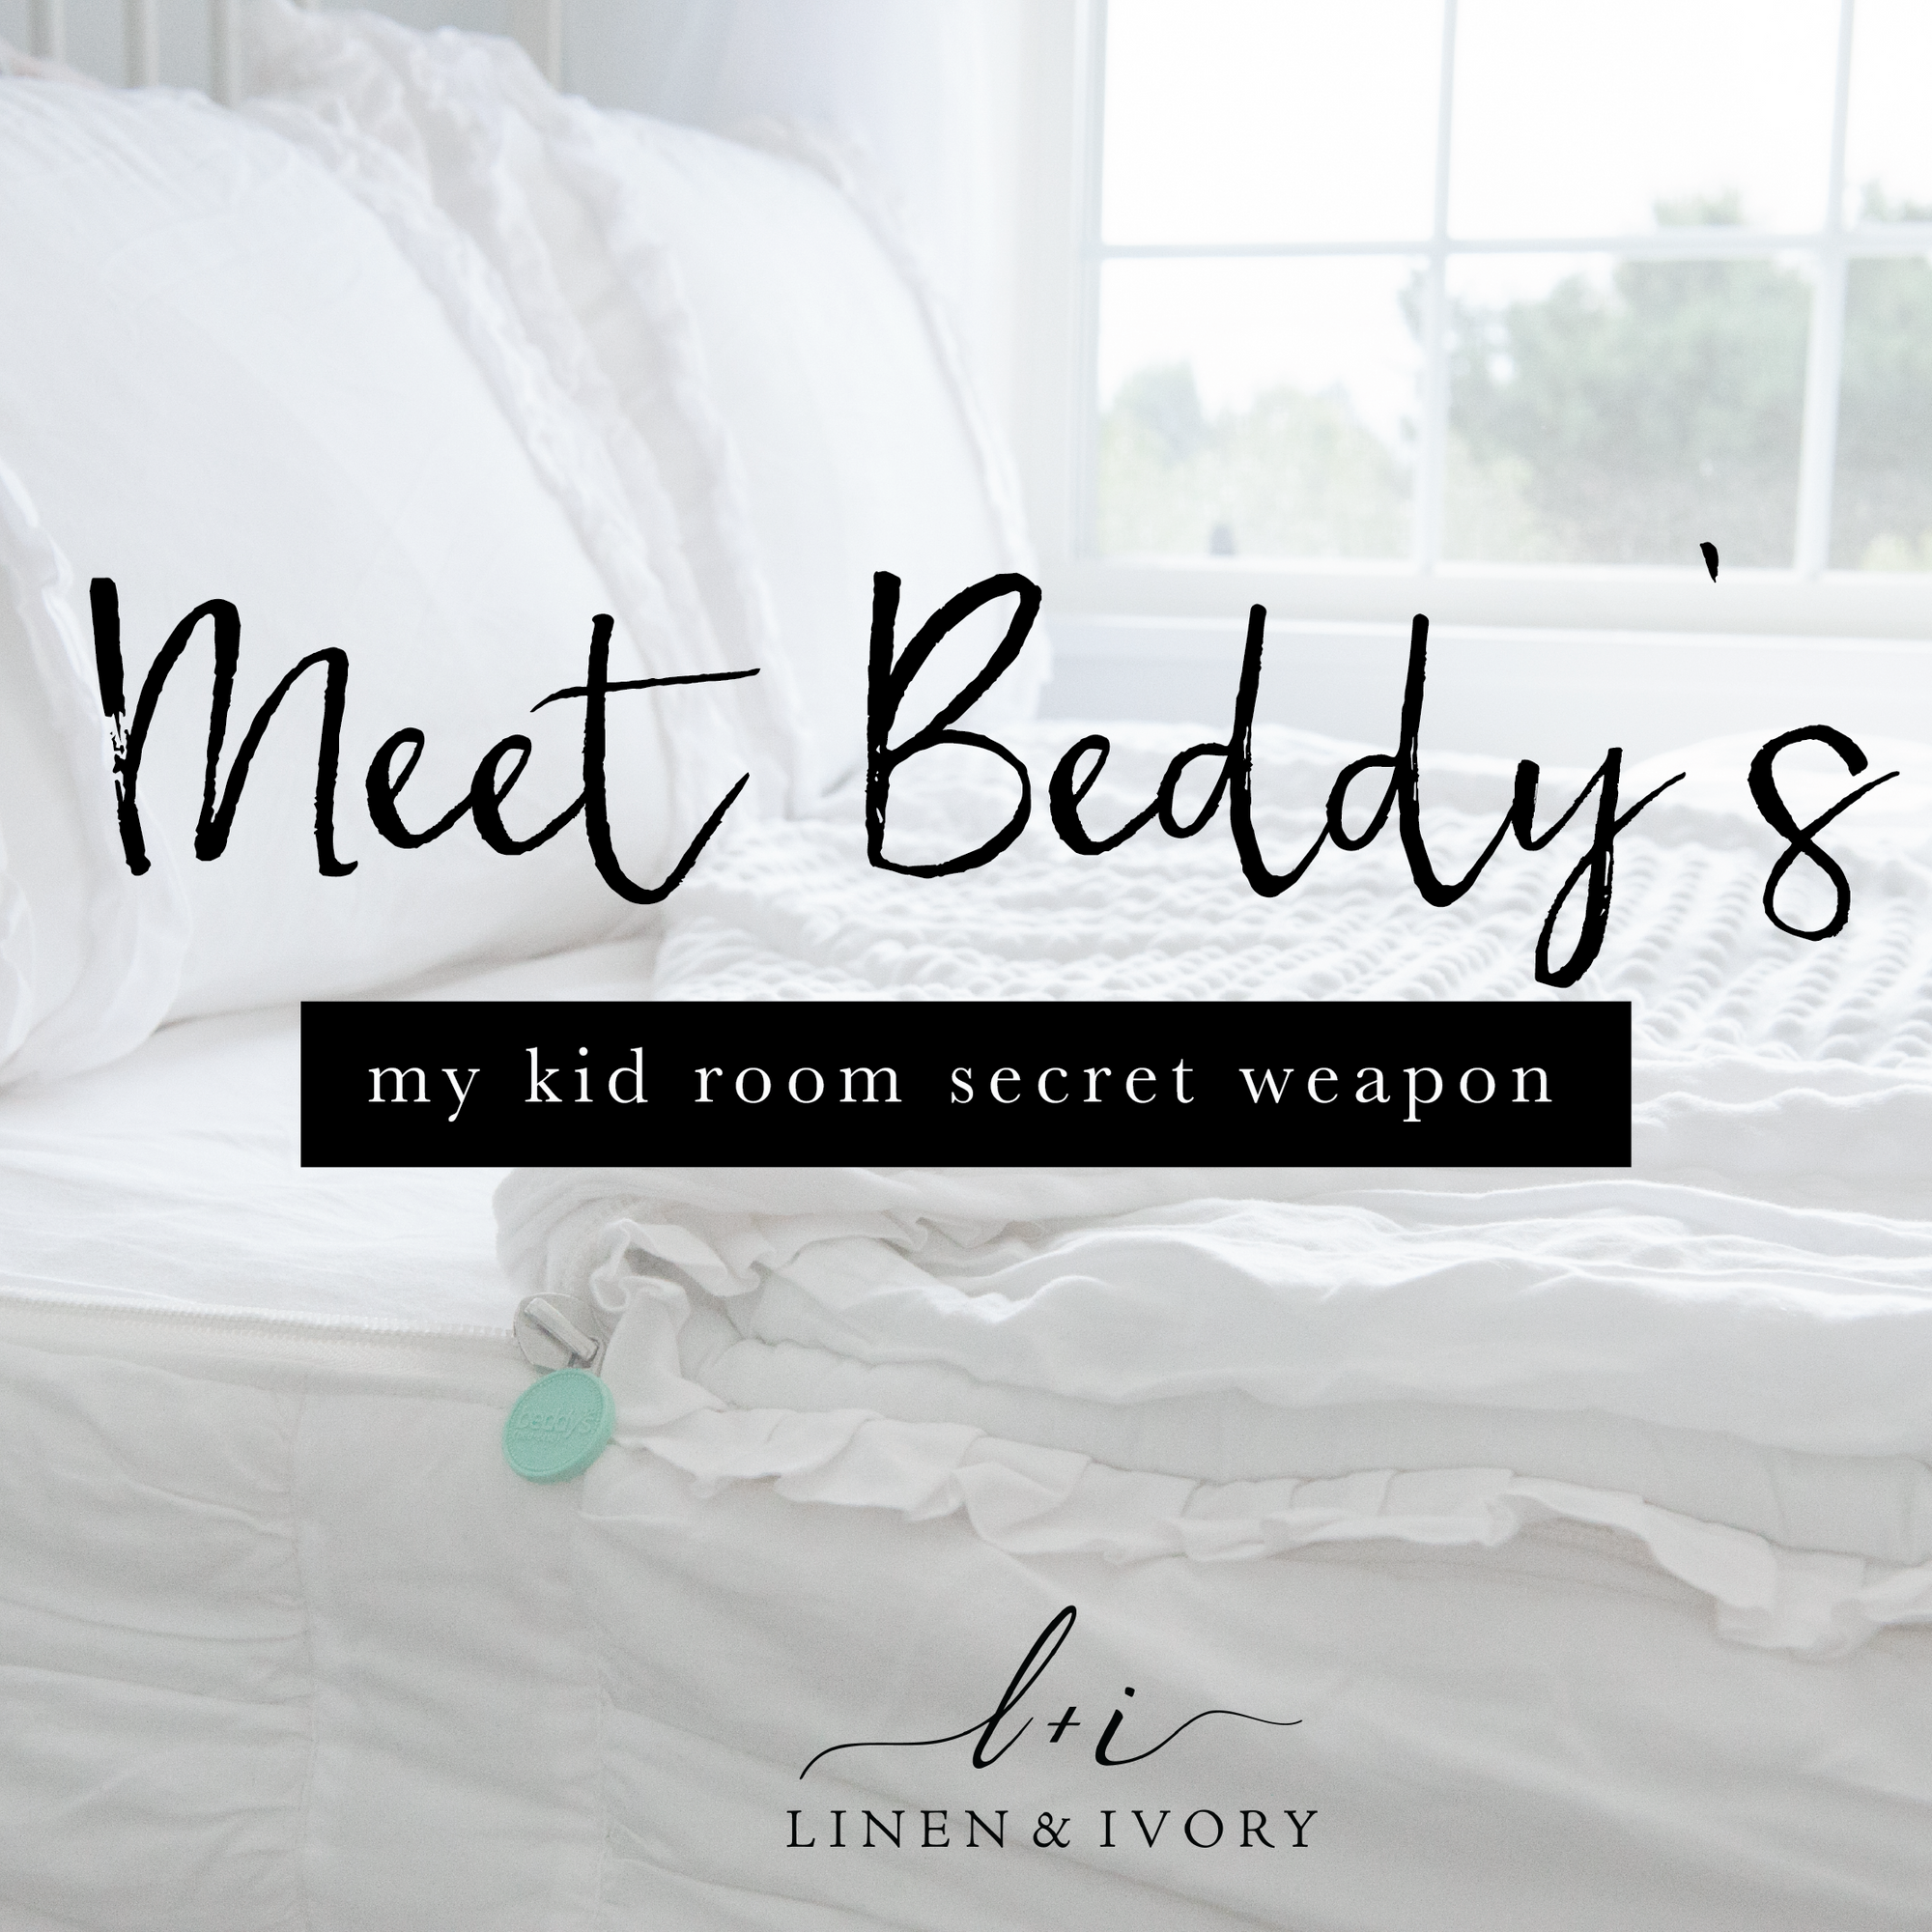 Meet Beddy's: My Kid Room Secret Weapon